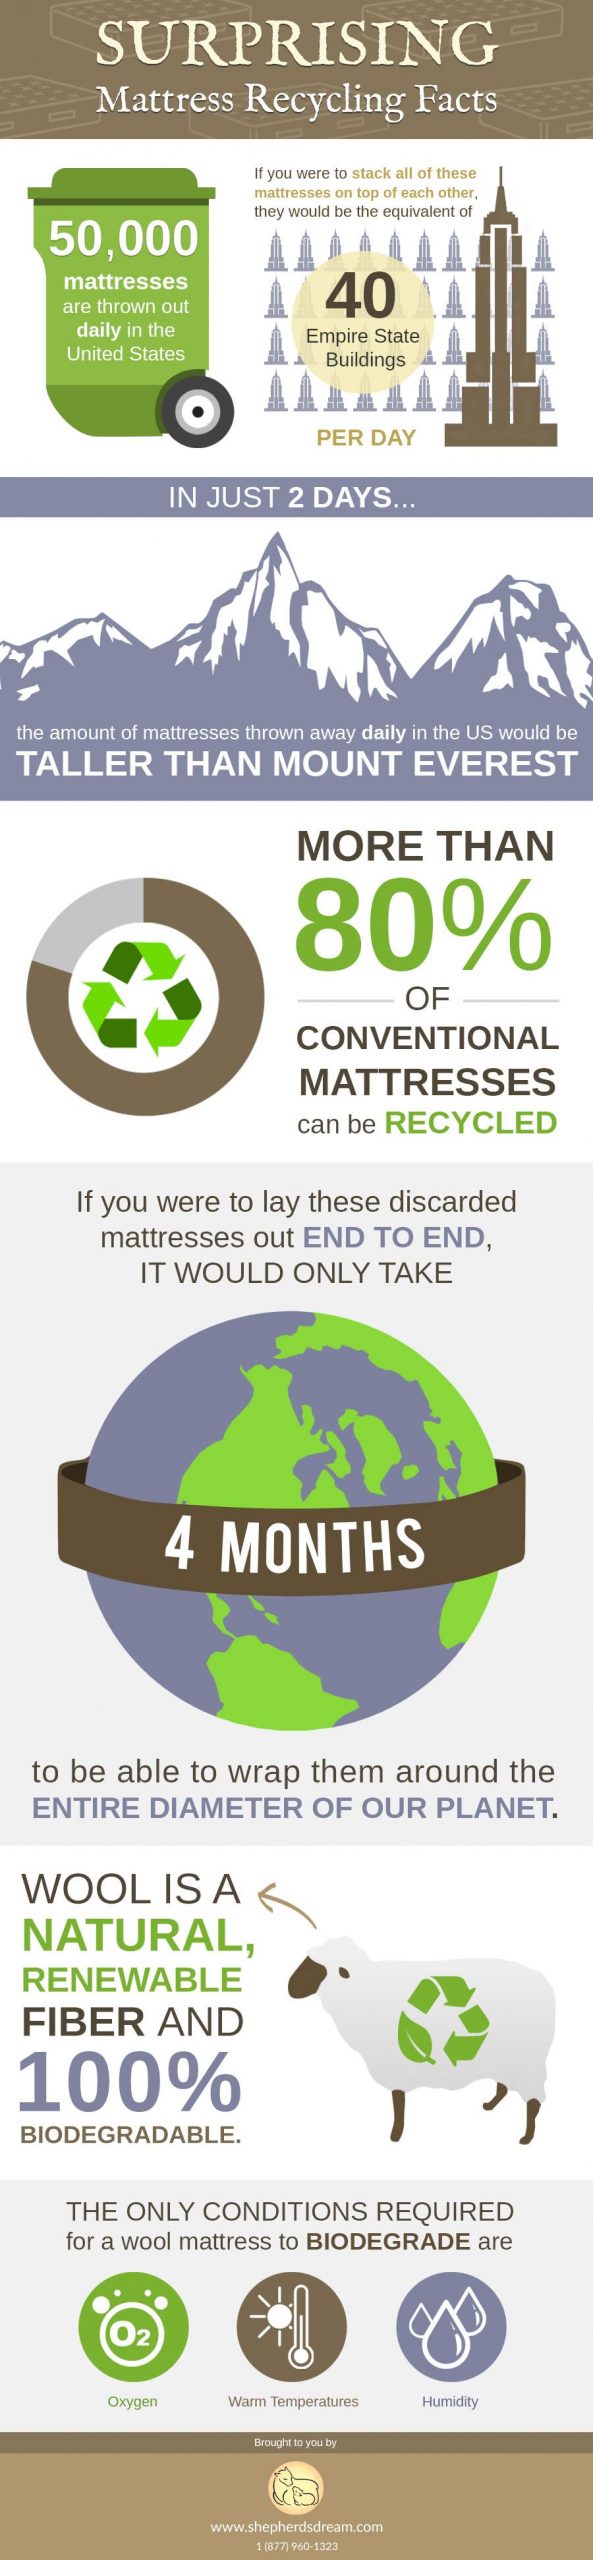 https://shepherdsdream.com/wp-content/uploads/2021/06/Surprising-Mattress-Recycling-Facts-scaled.jpg